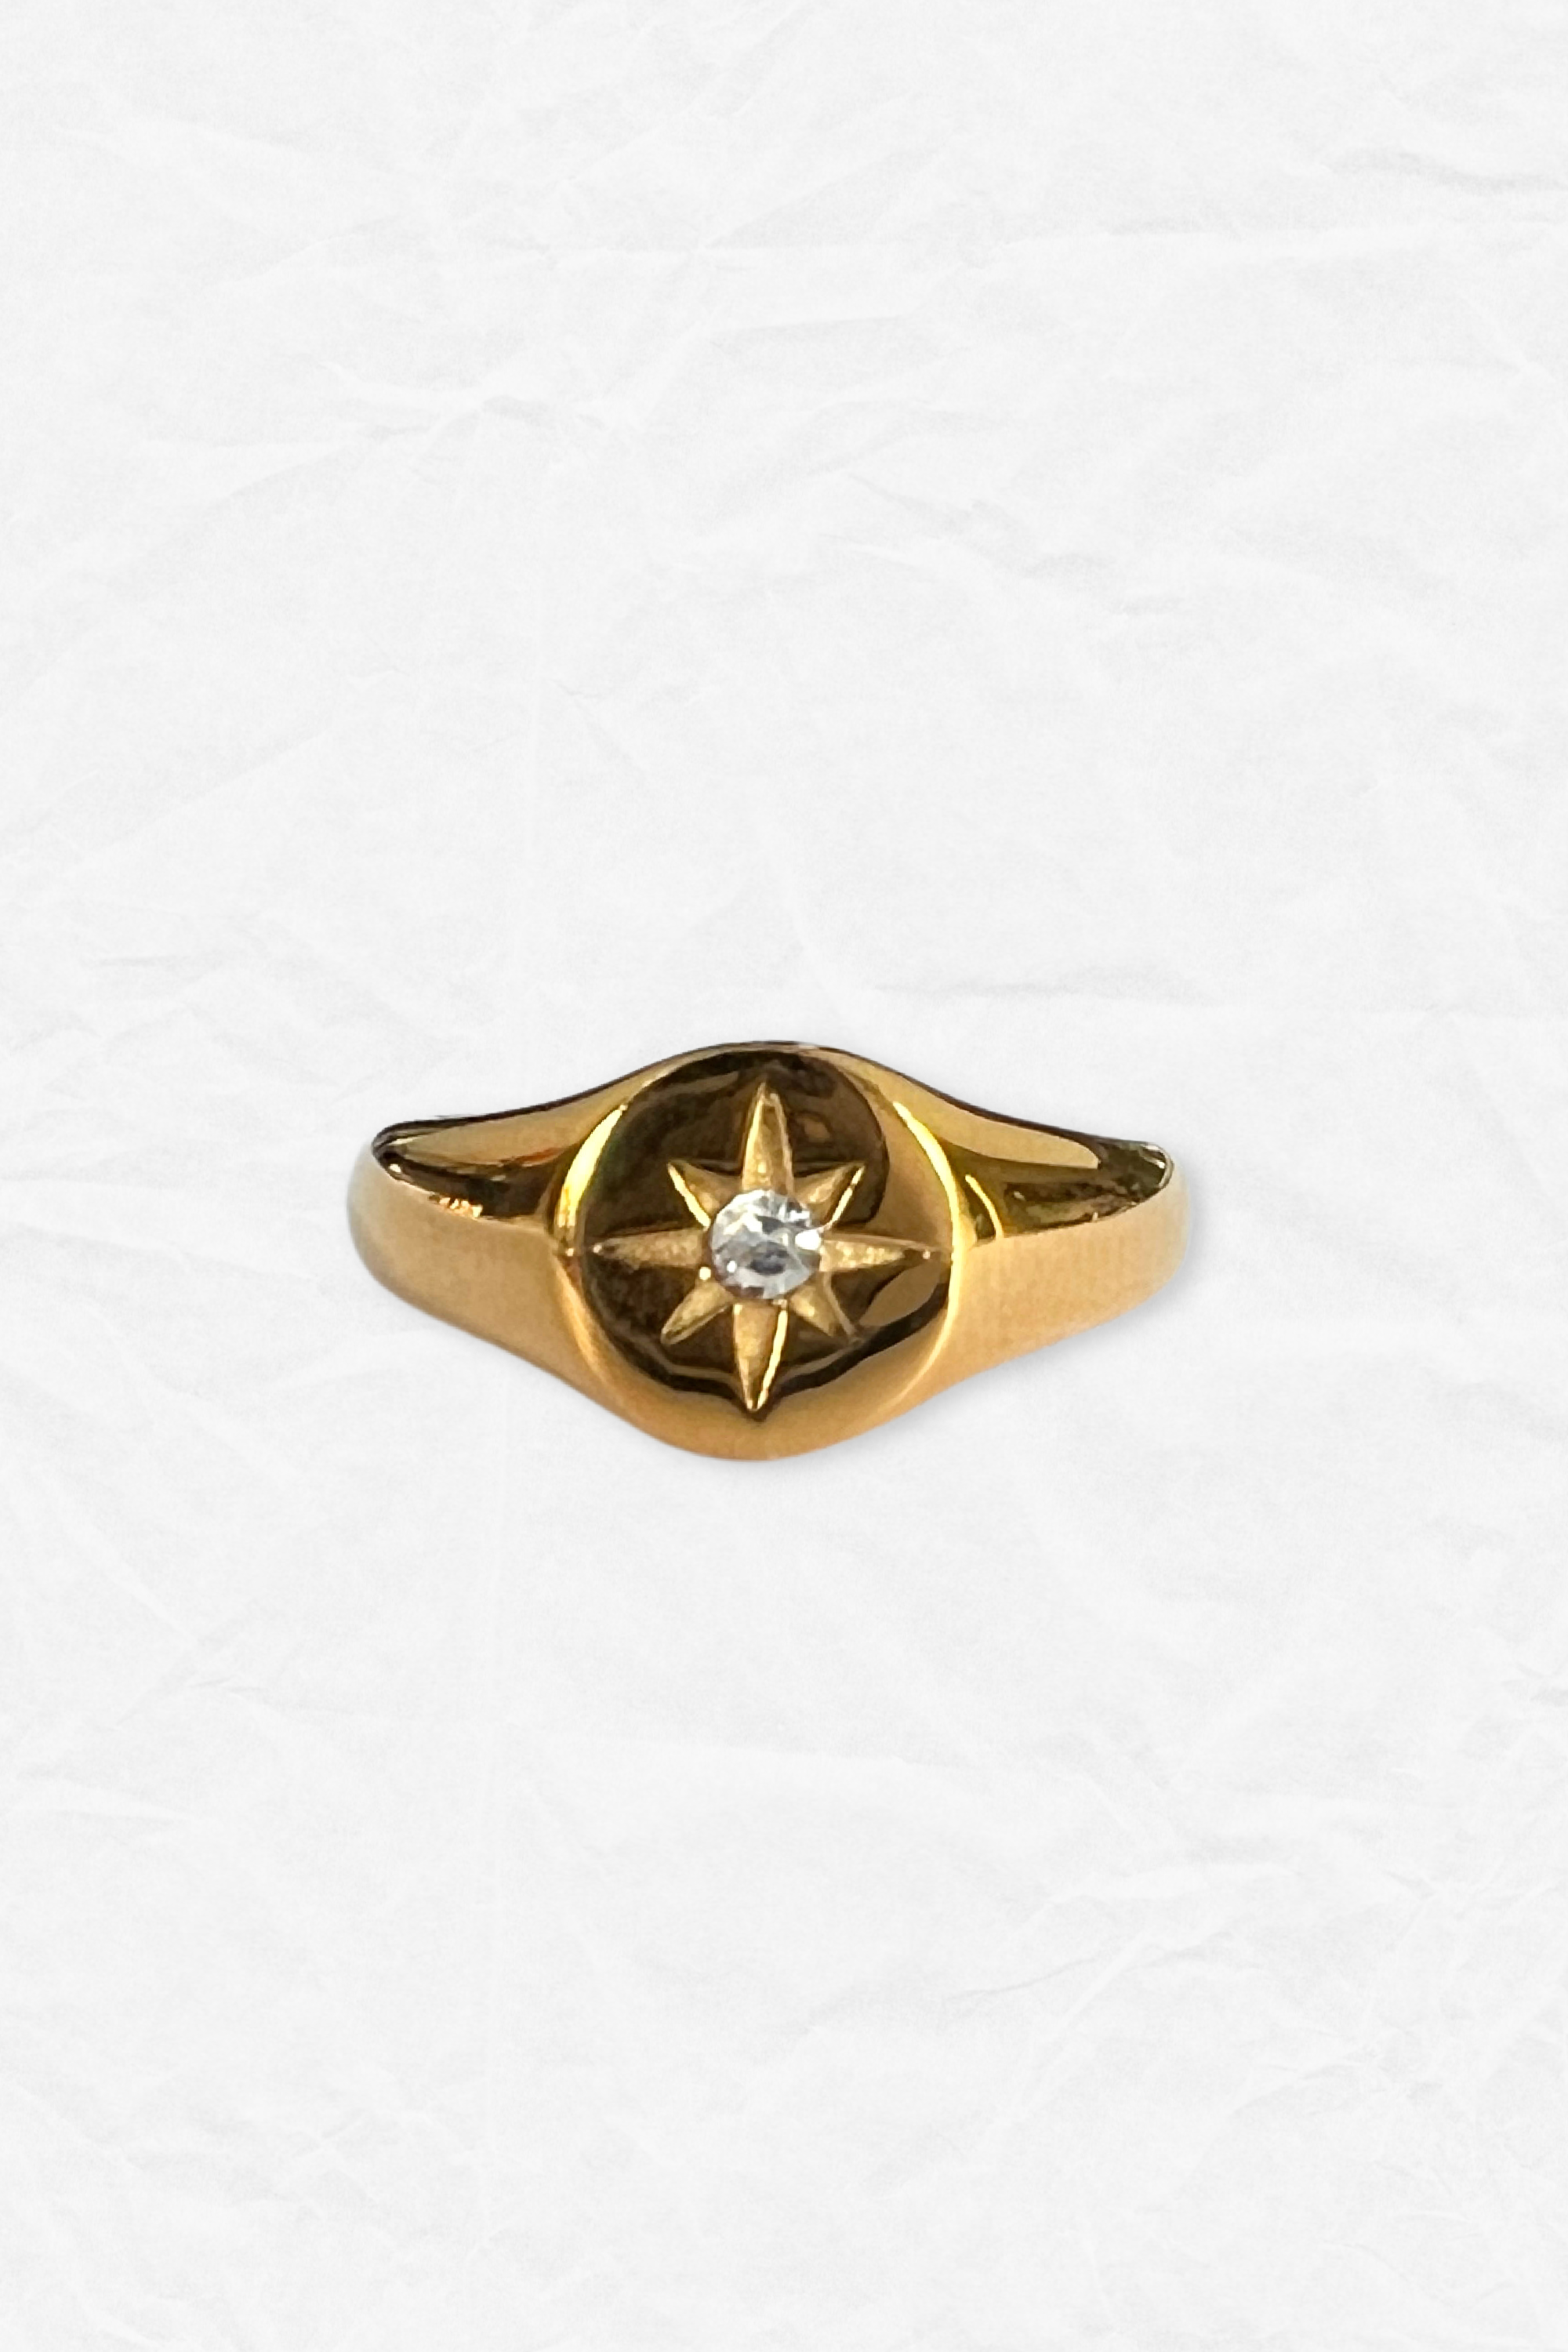 Sirius star ring